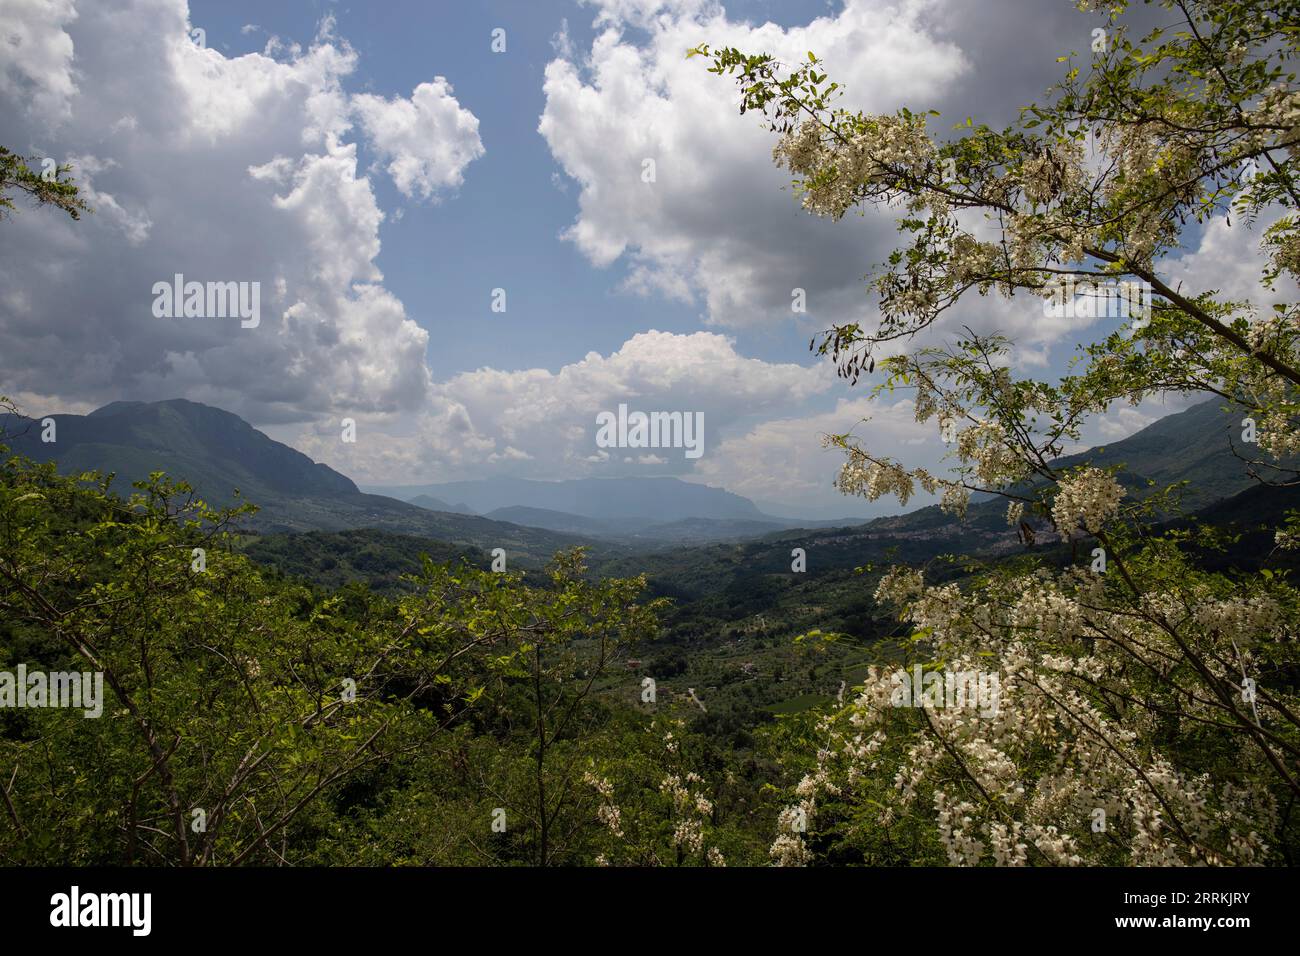 Hermoso paisaje en las montañas, paisaje fotografiado en la región de Salerno, Campania, Italia Foto de stock